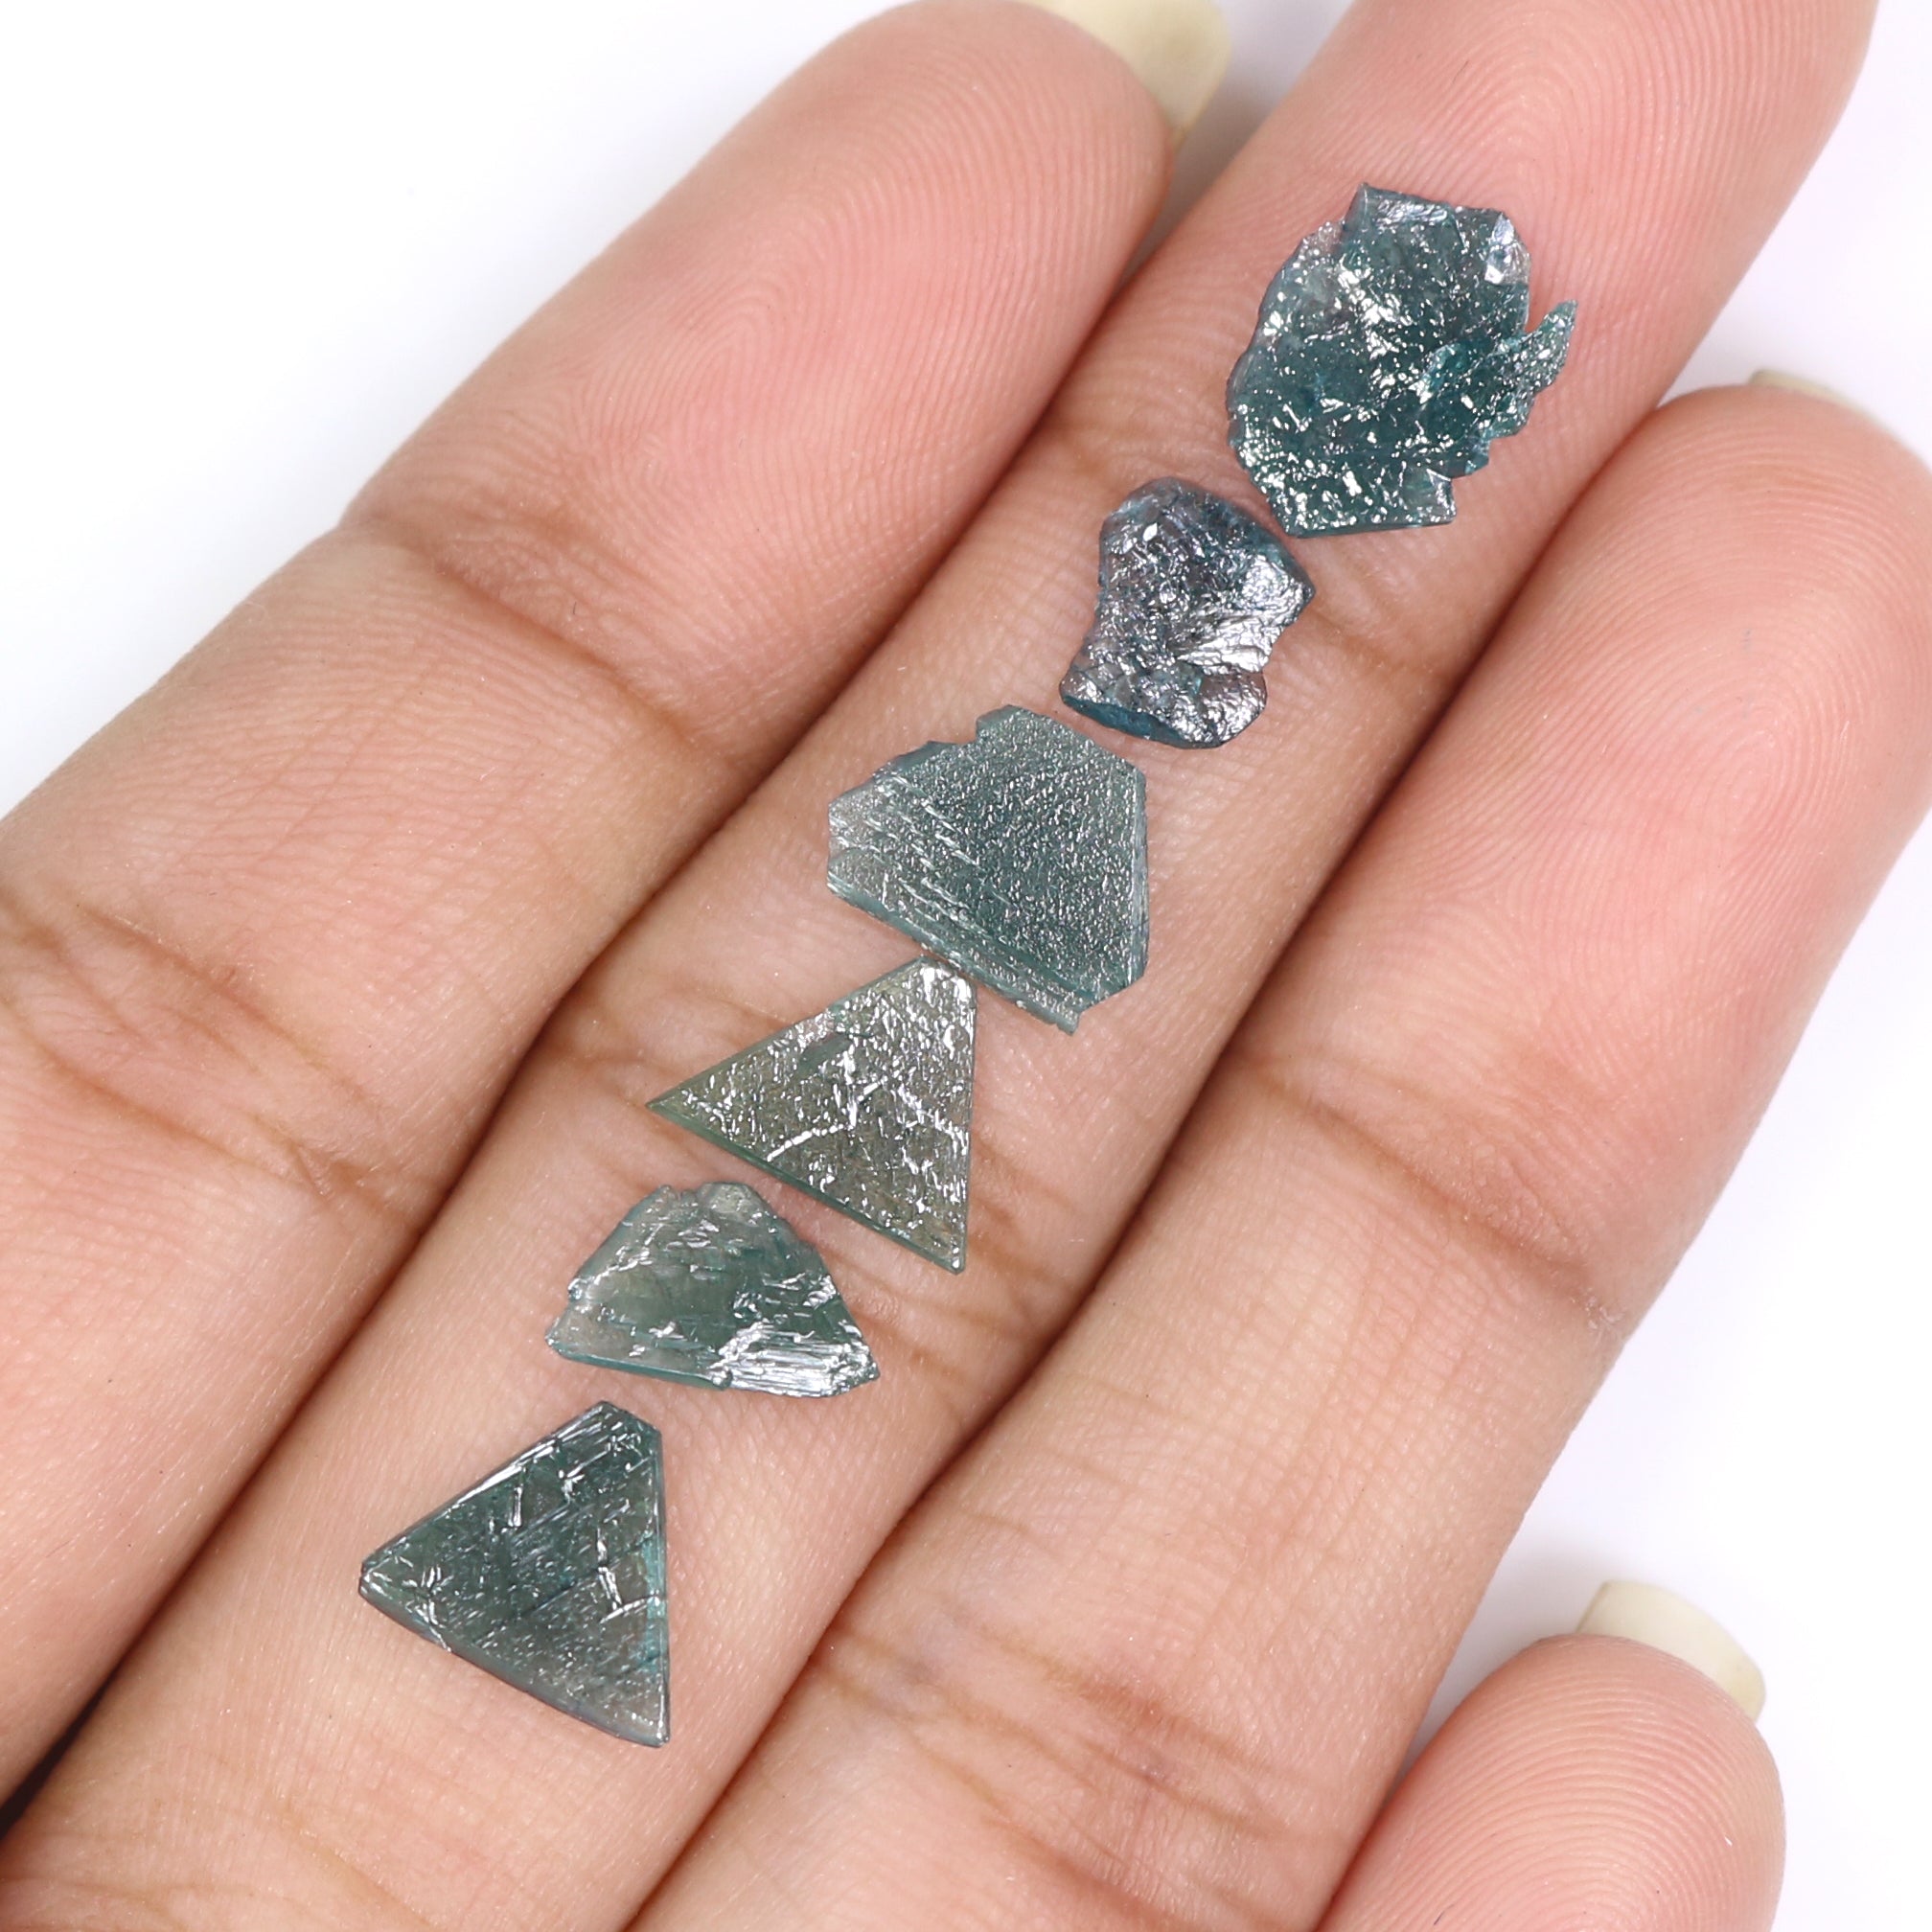 1.85 CT Natural Loose Slice Diamond Blue Color Diamond Natural Loose Diamond 7.00 MM Slice Cut Diamond Irregular Cut Slice Shape LQ9169